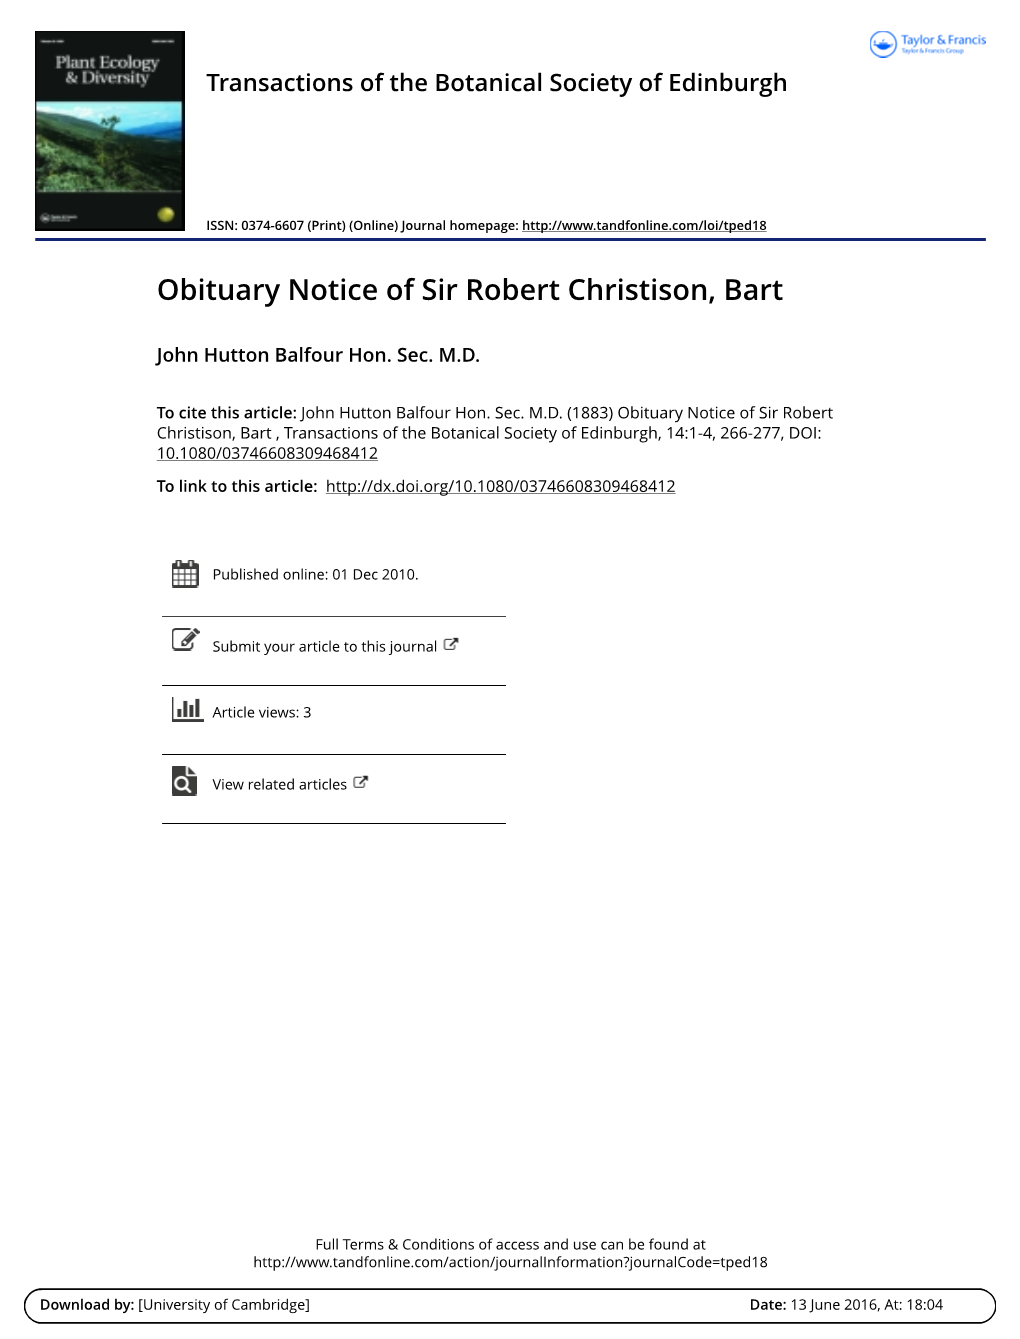 Obituary Notice of Sir Robert Christison, Bart